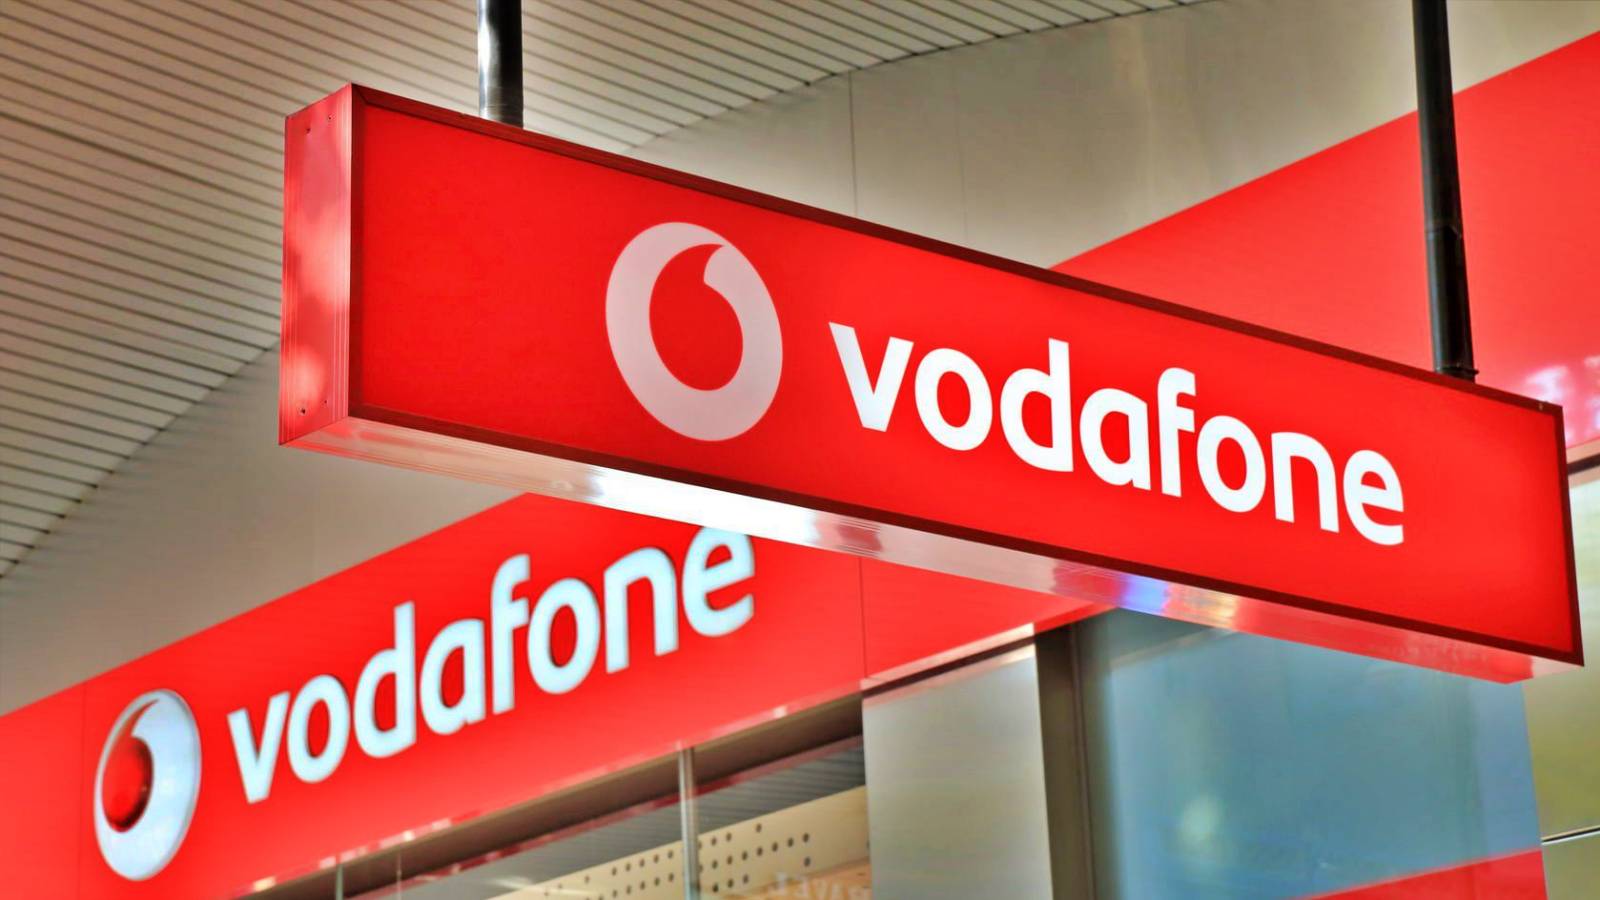 Vodafone expansion